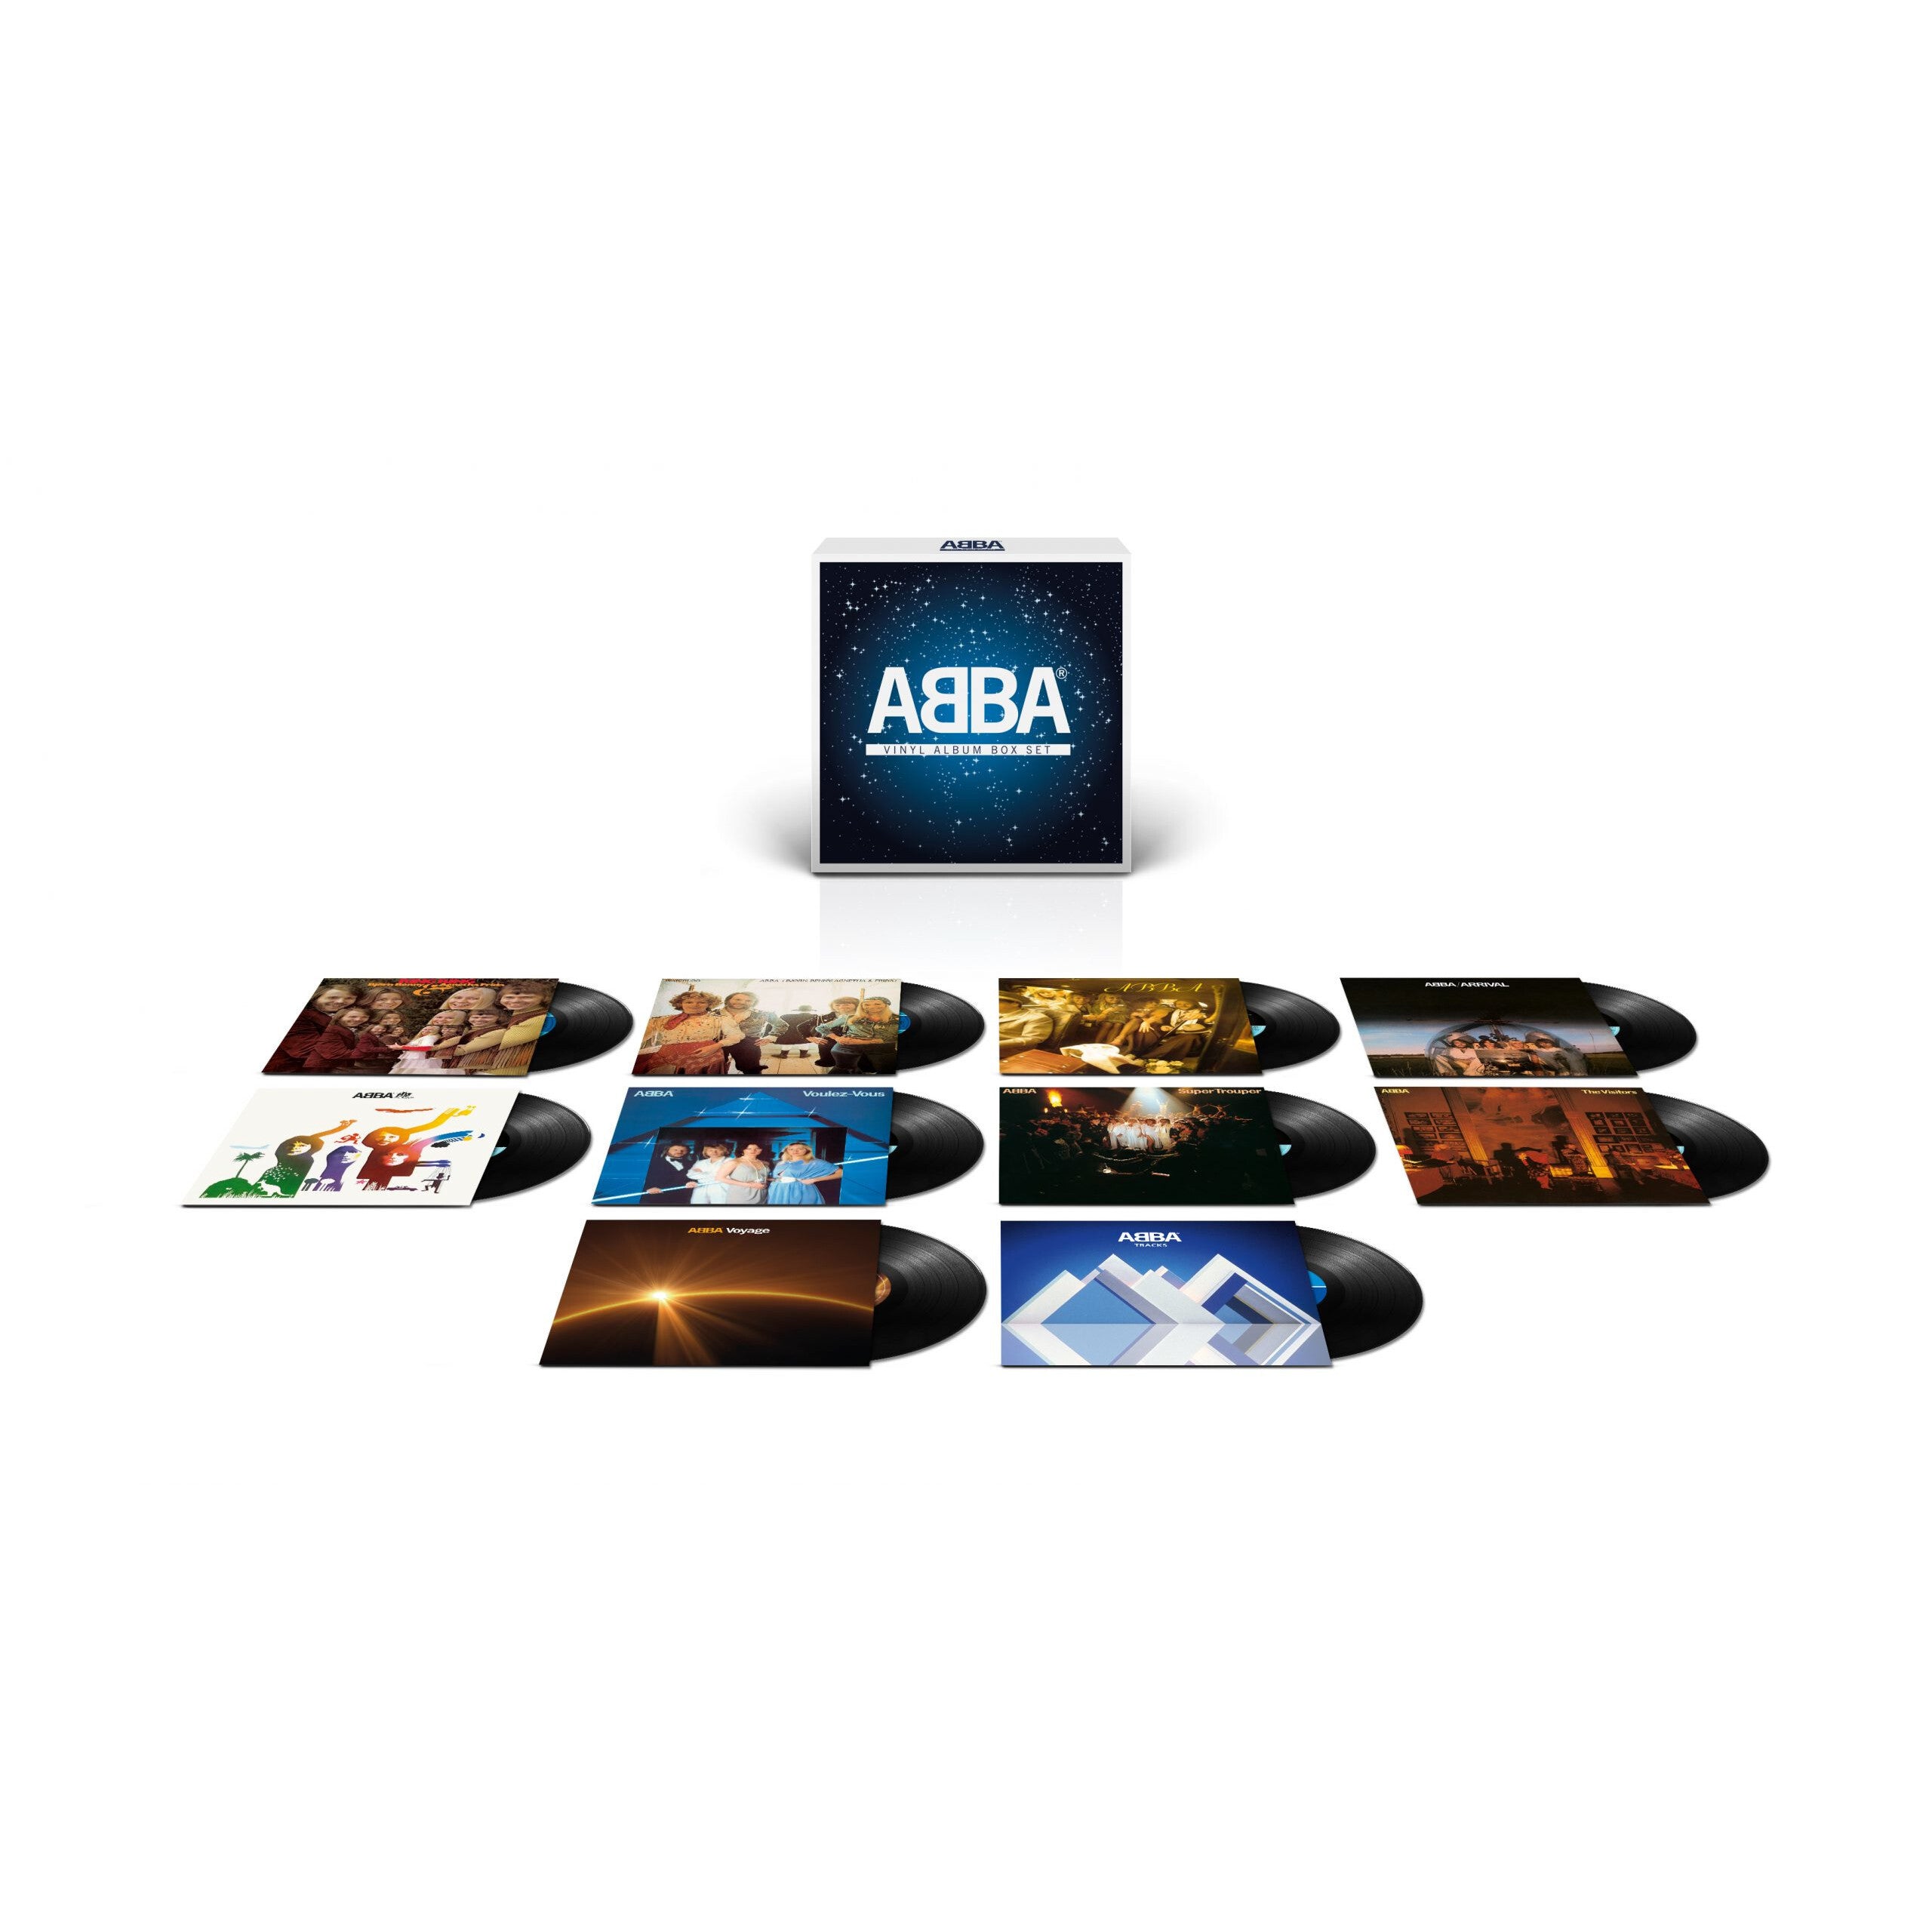 https://images.bravado.de/prod/product-assets/product-asset-data/abba/abba-2/products/141229/web/307274/image-thumb__307274__3000x3000_original/ABBA-Studio-Albums-Vinyl-Album-141229-307274.ec6fa625.jpg